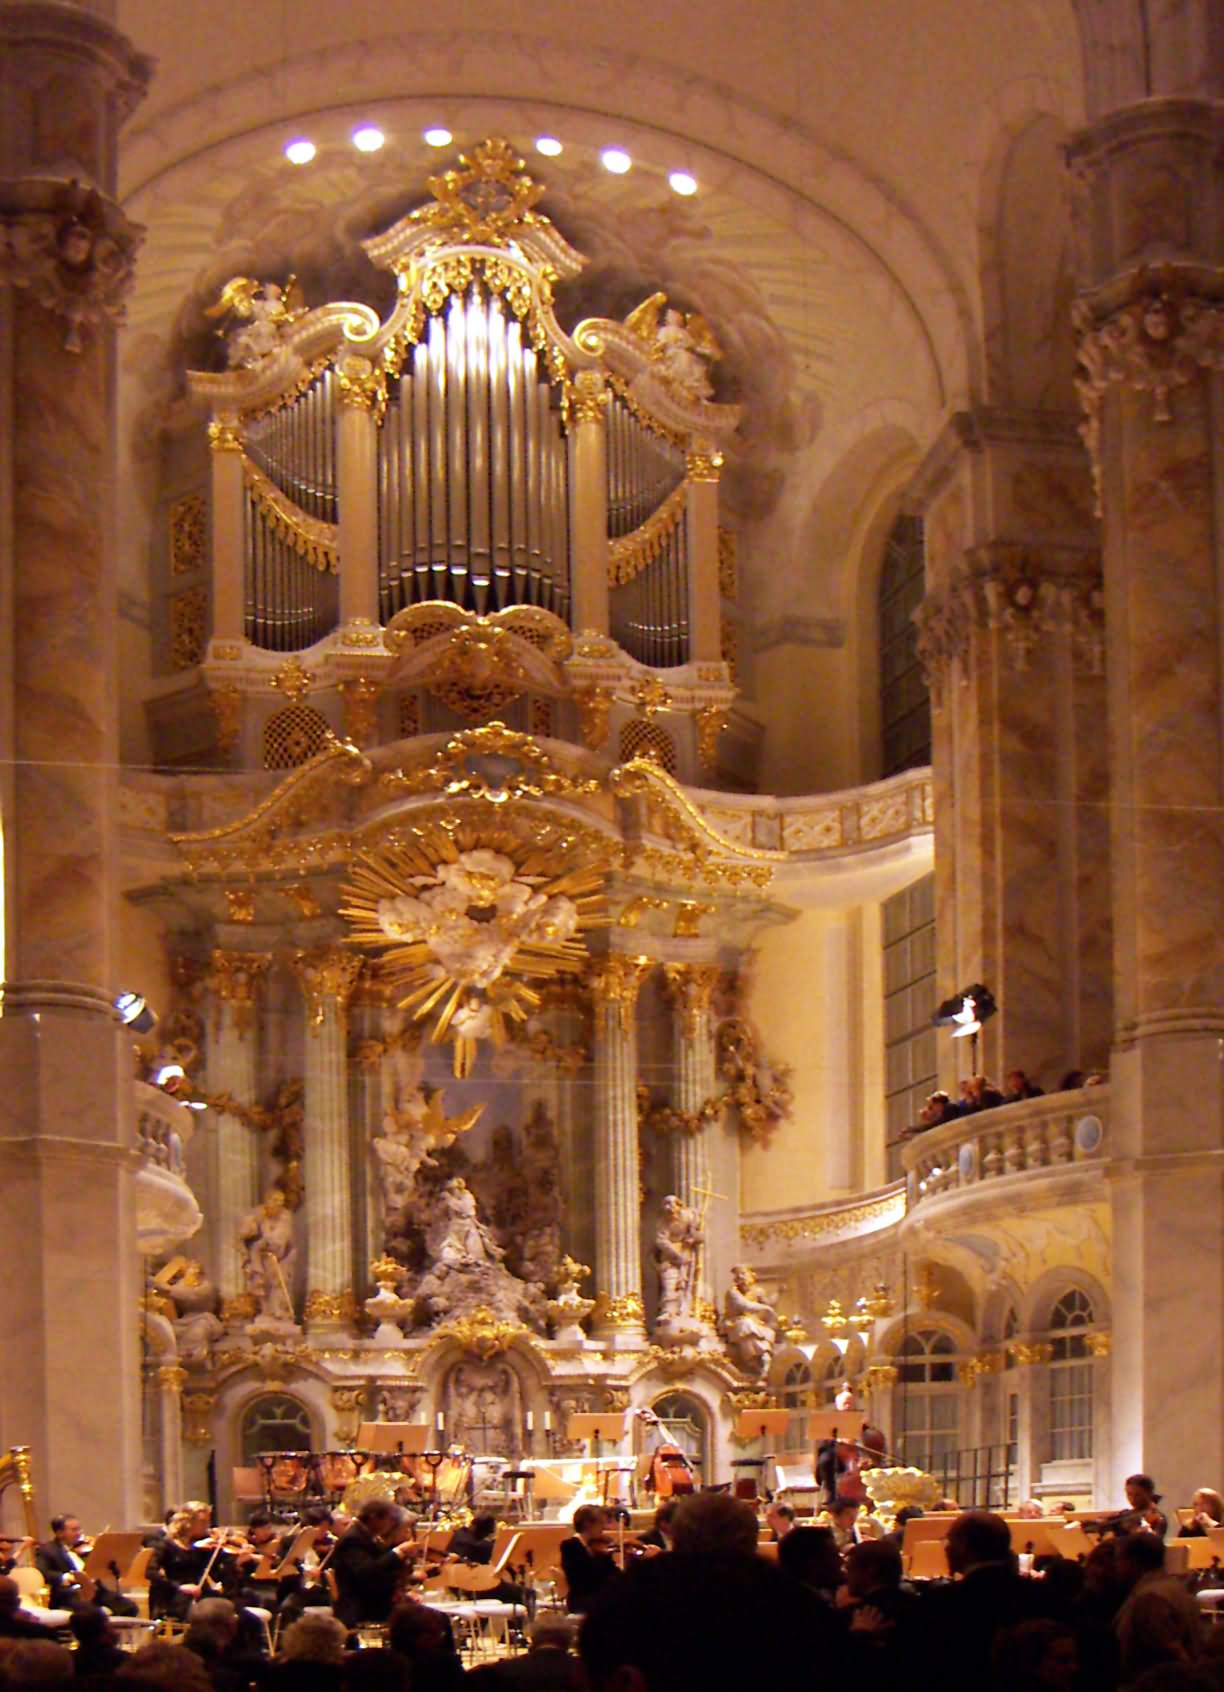 Orgel View Inside The Frauenkirche Dresden In Germany